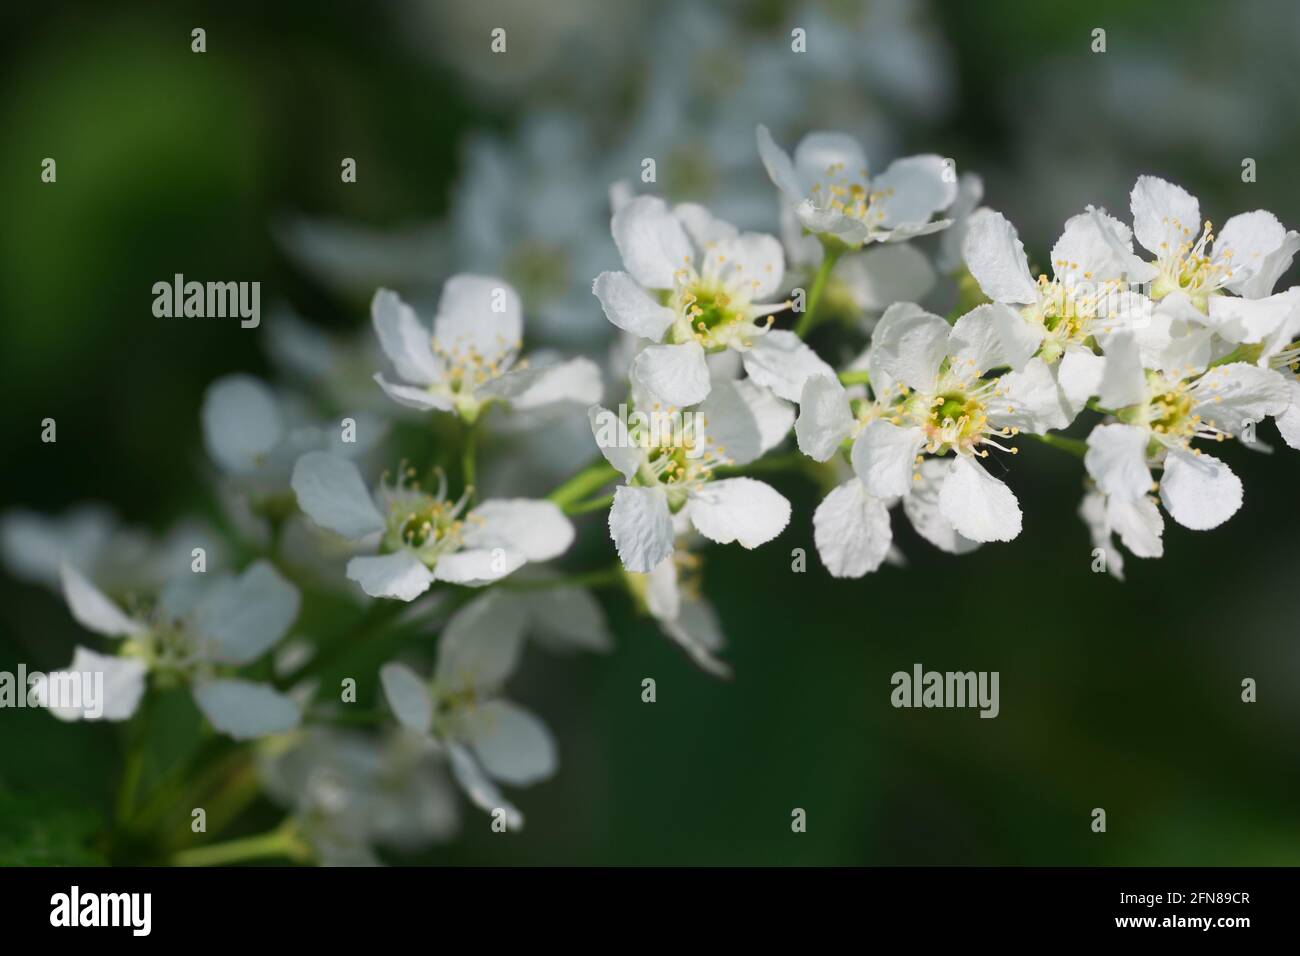 Prunus padus,  bird cherry, hackberry spring flowers on branches closeup  selective focus Stock Photo